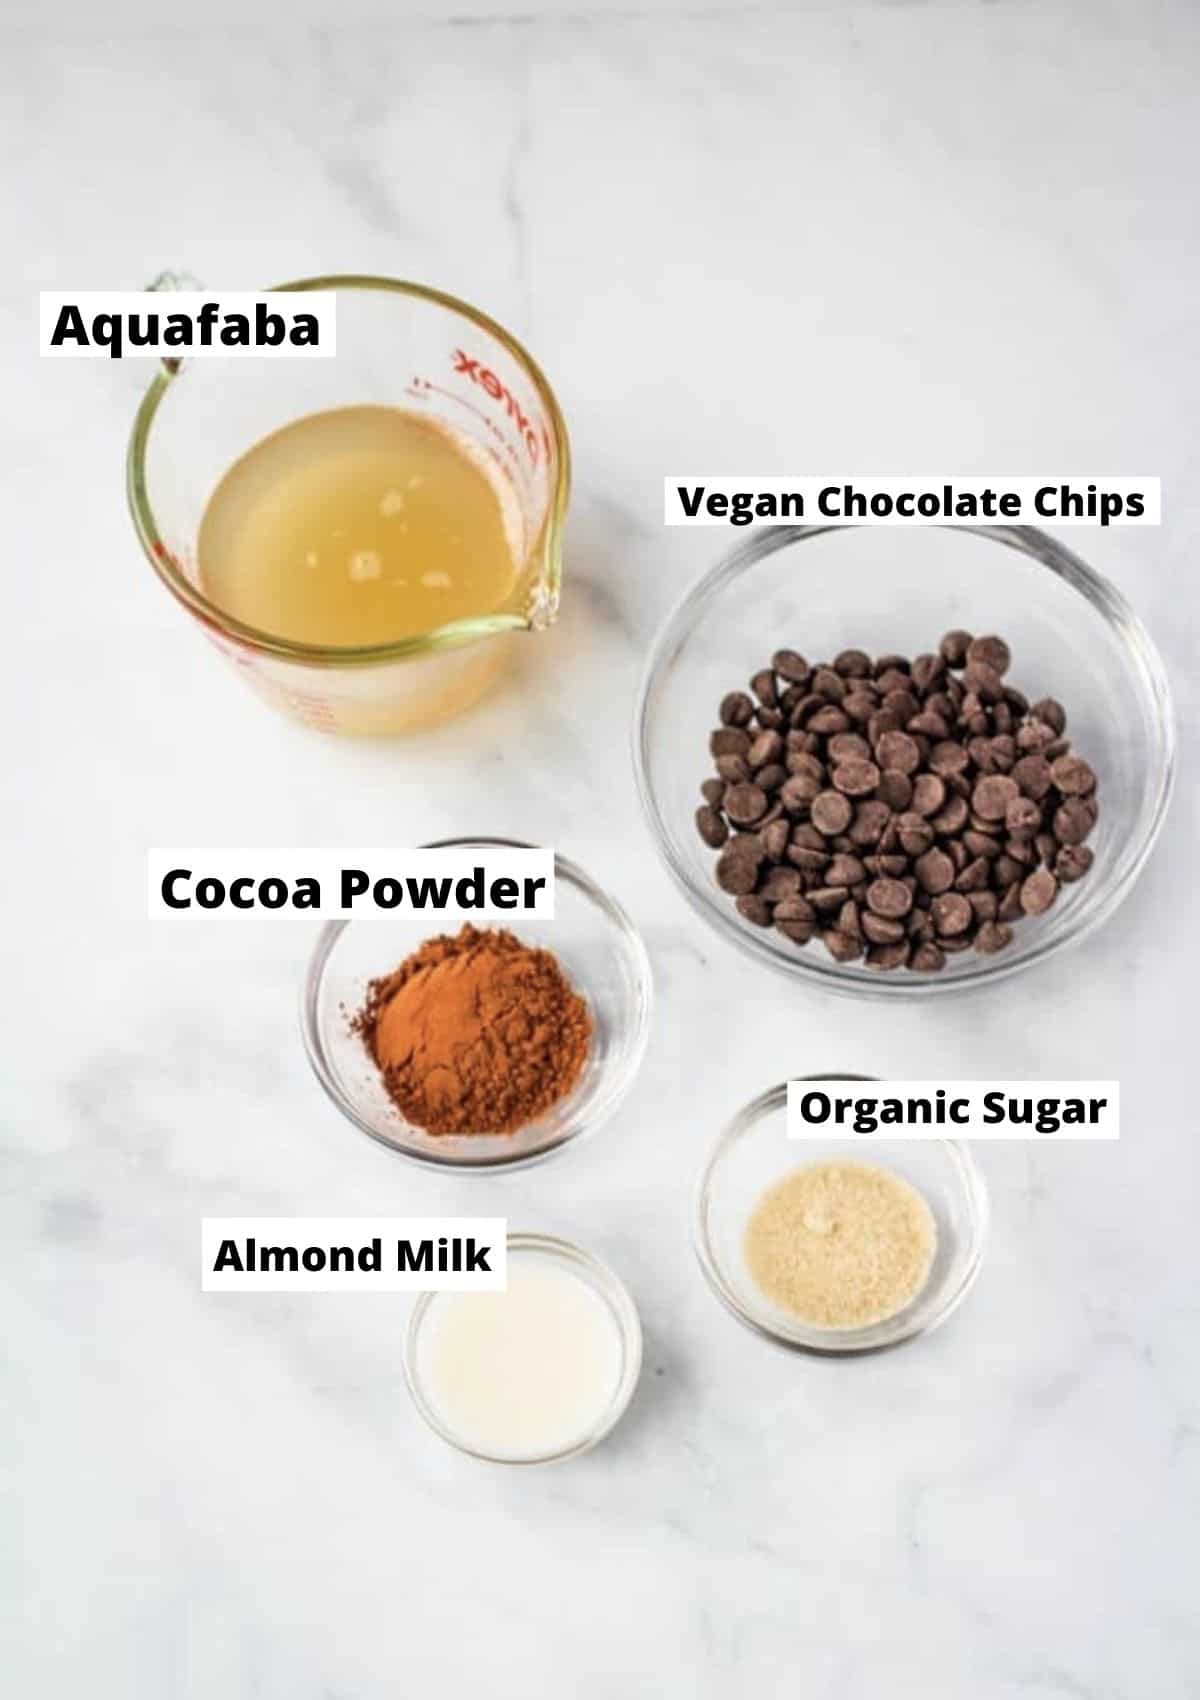 Aquafaba mousse ingredients: aquafaba, chocolate chips, sugar, almond milk, cocoa powder.